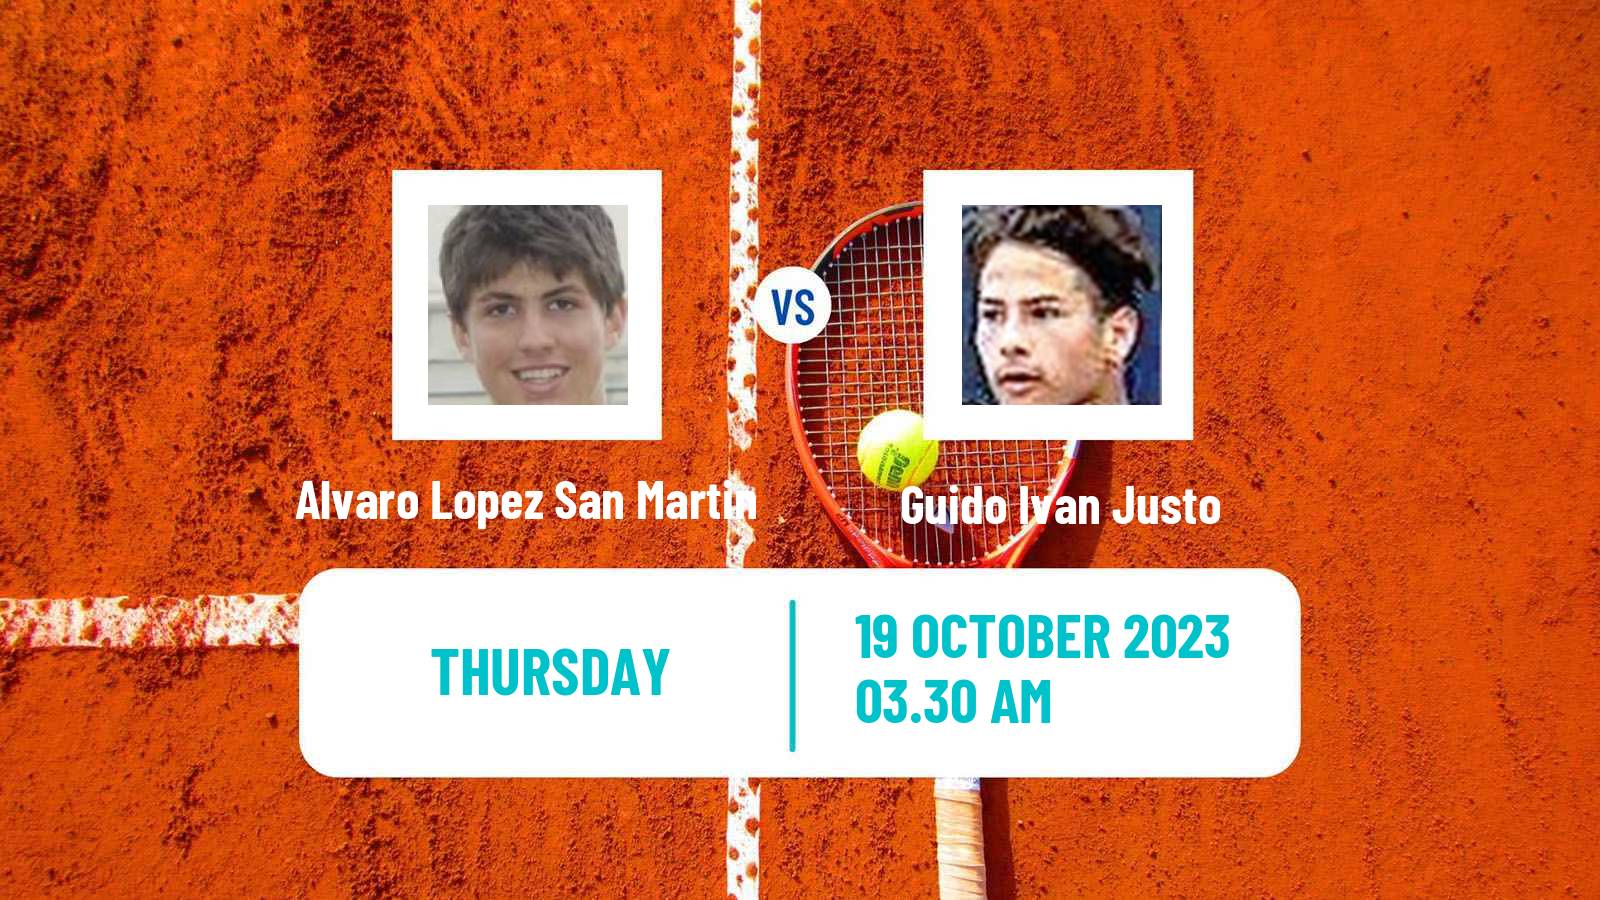 Tennis ITF M15 Castellon Men Alvaro Lopez San Martin - Guido Ivan Justo